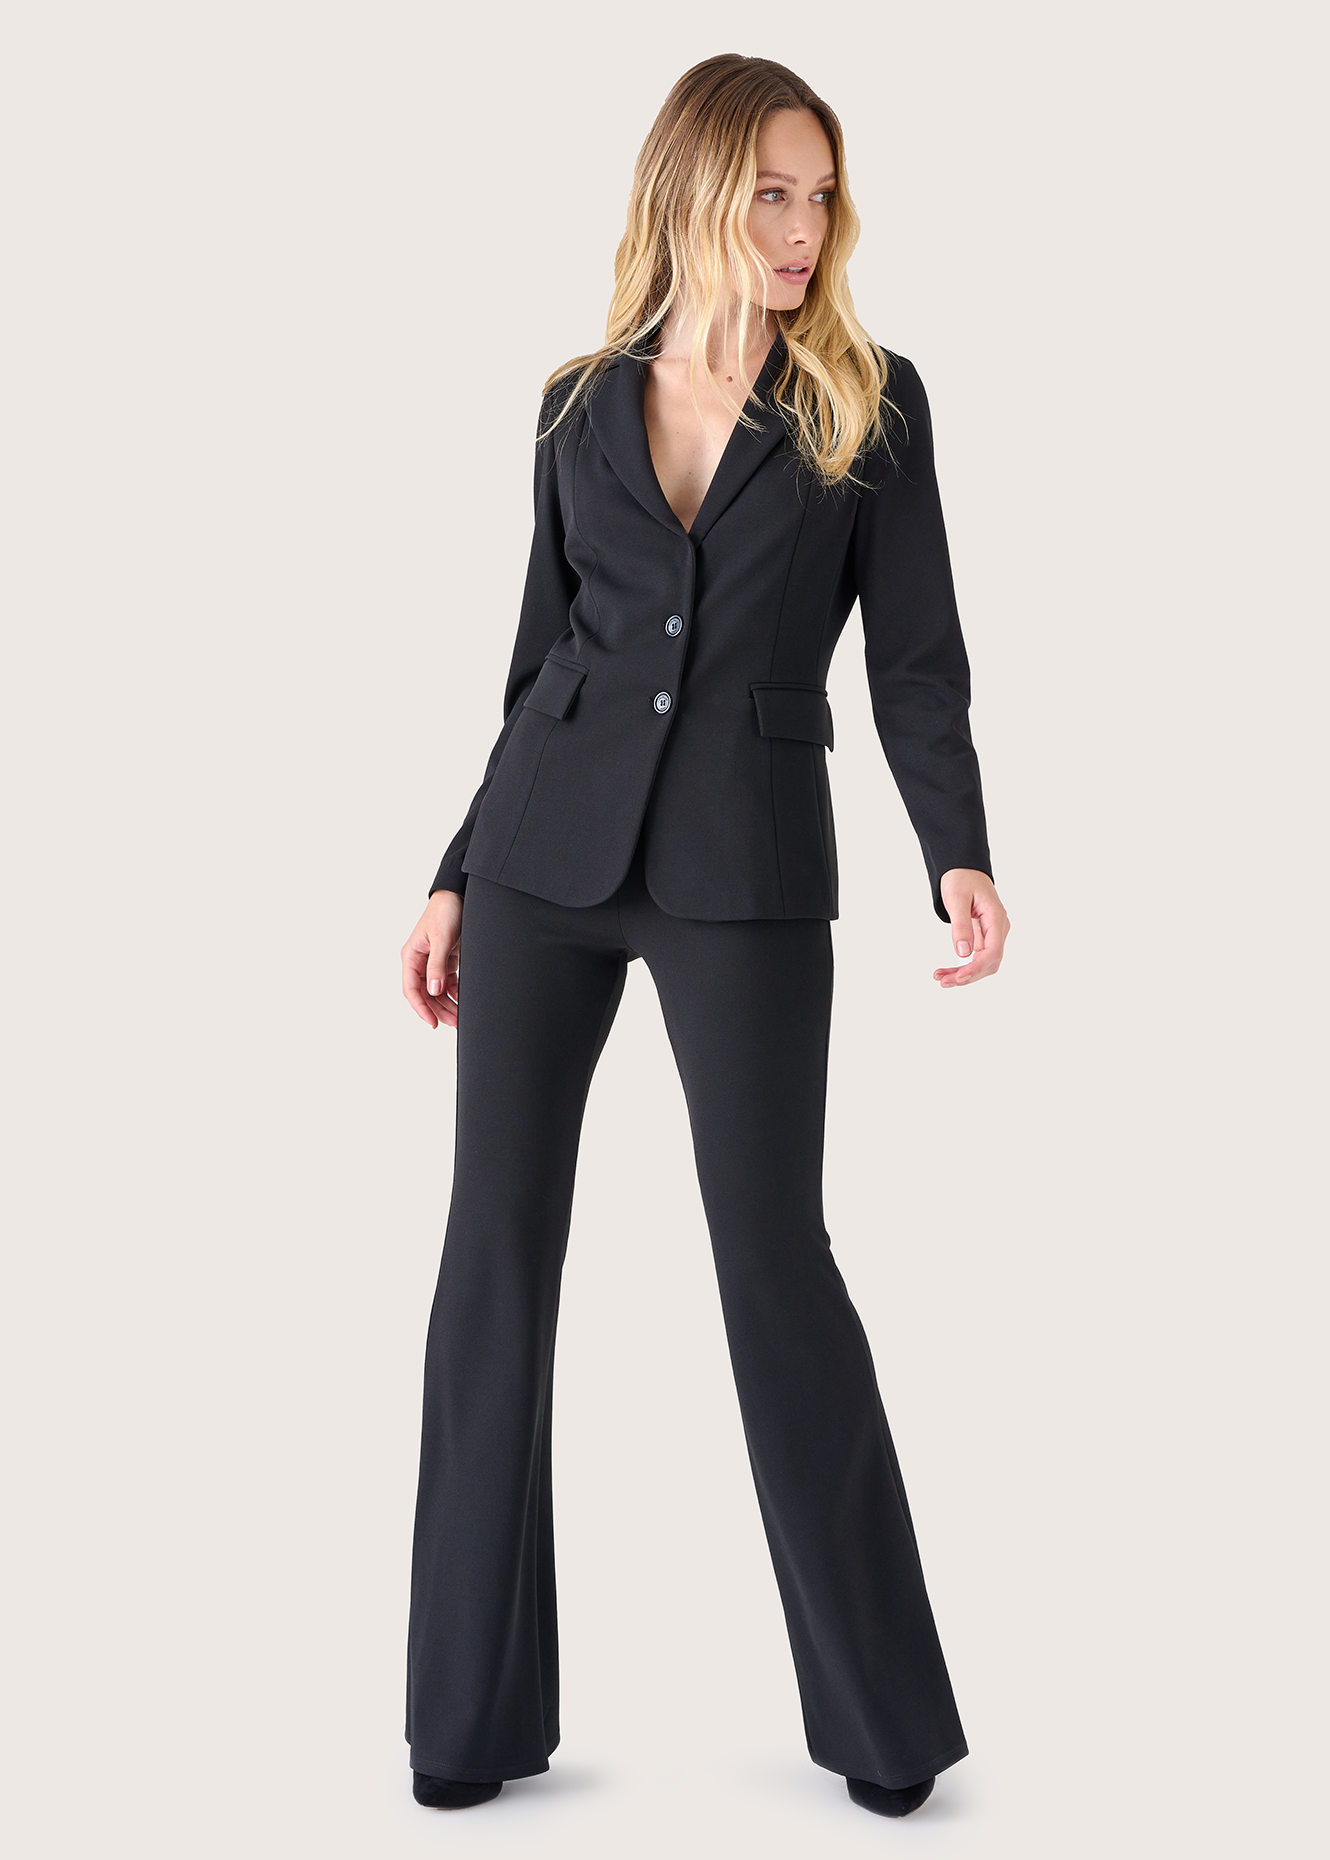 Black Bell Bottom Pants Suit Set With Blazer, Puffed Sleeve Blazer